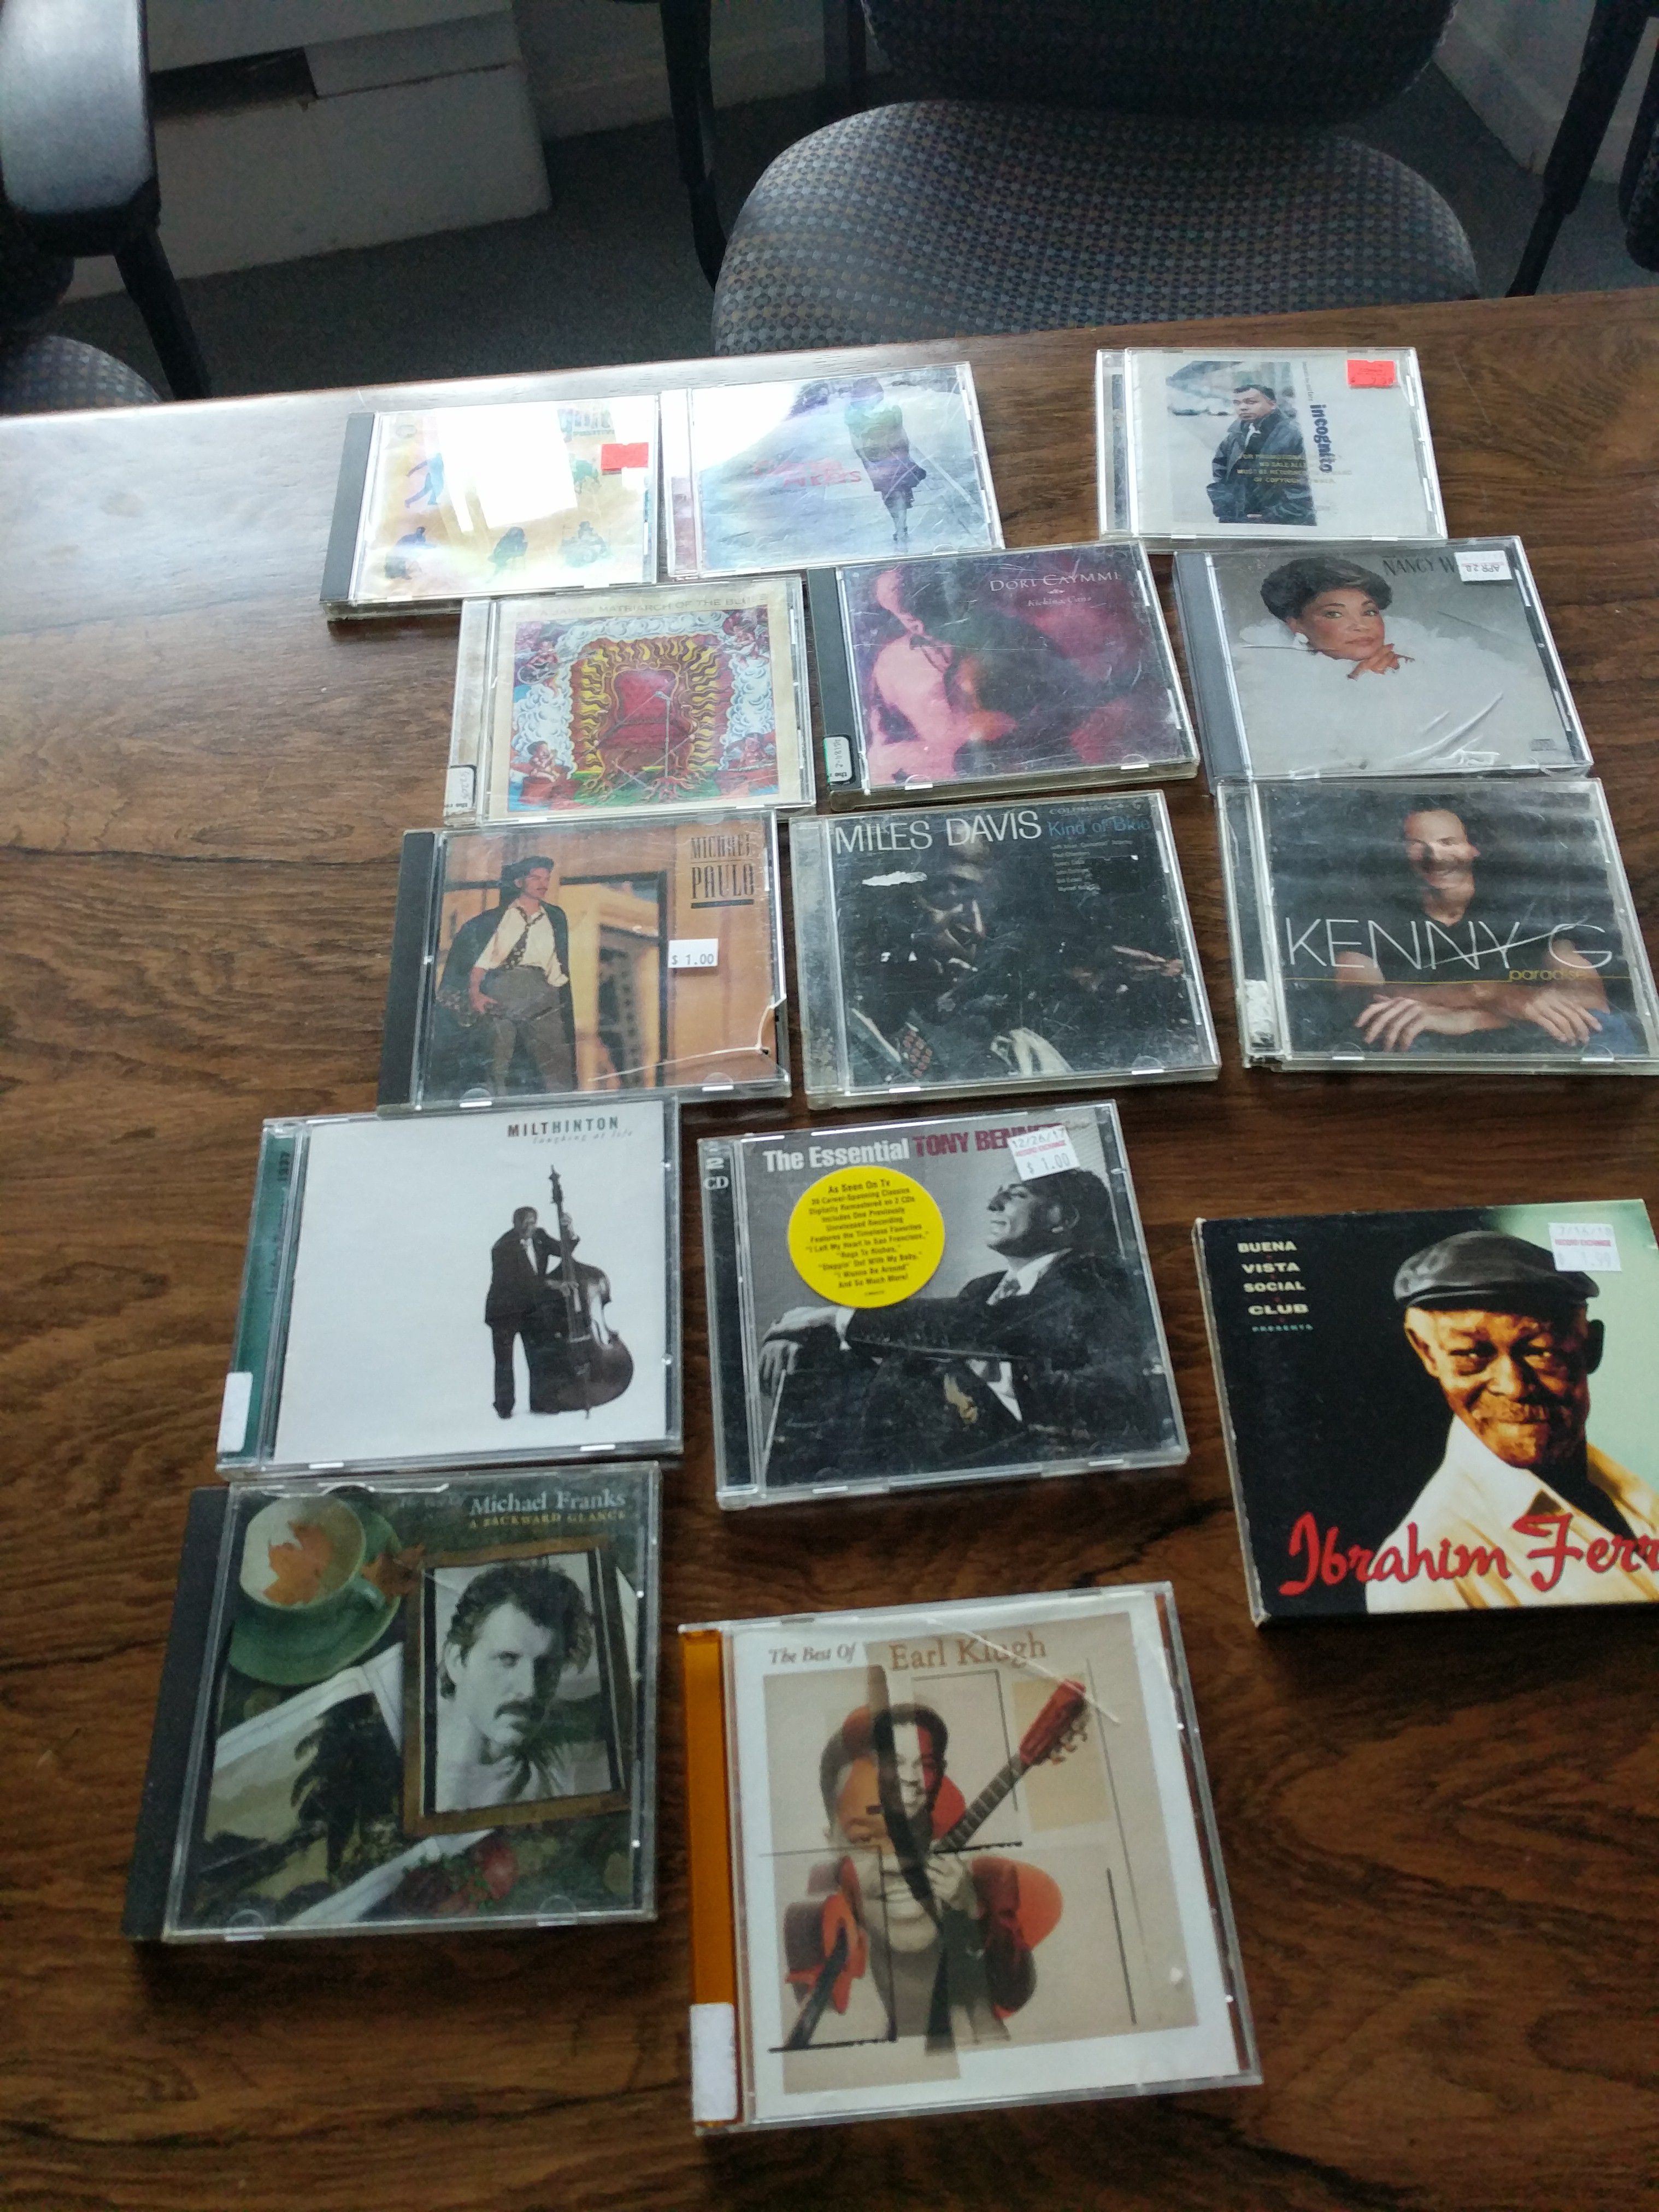 One hundred jazz cds for $10